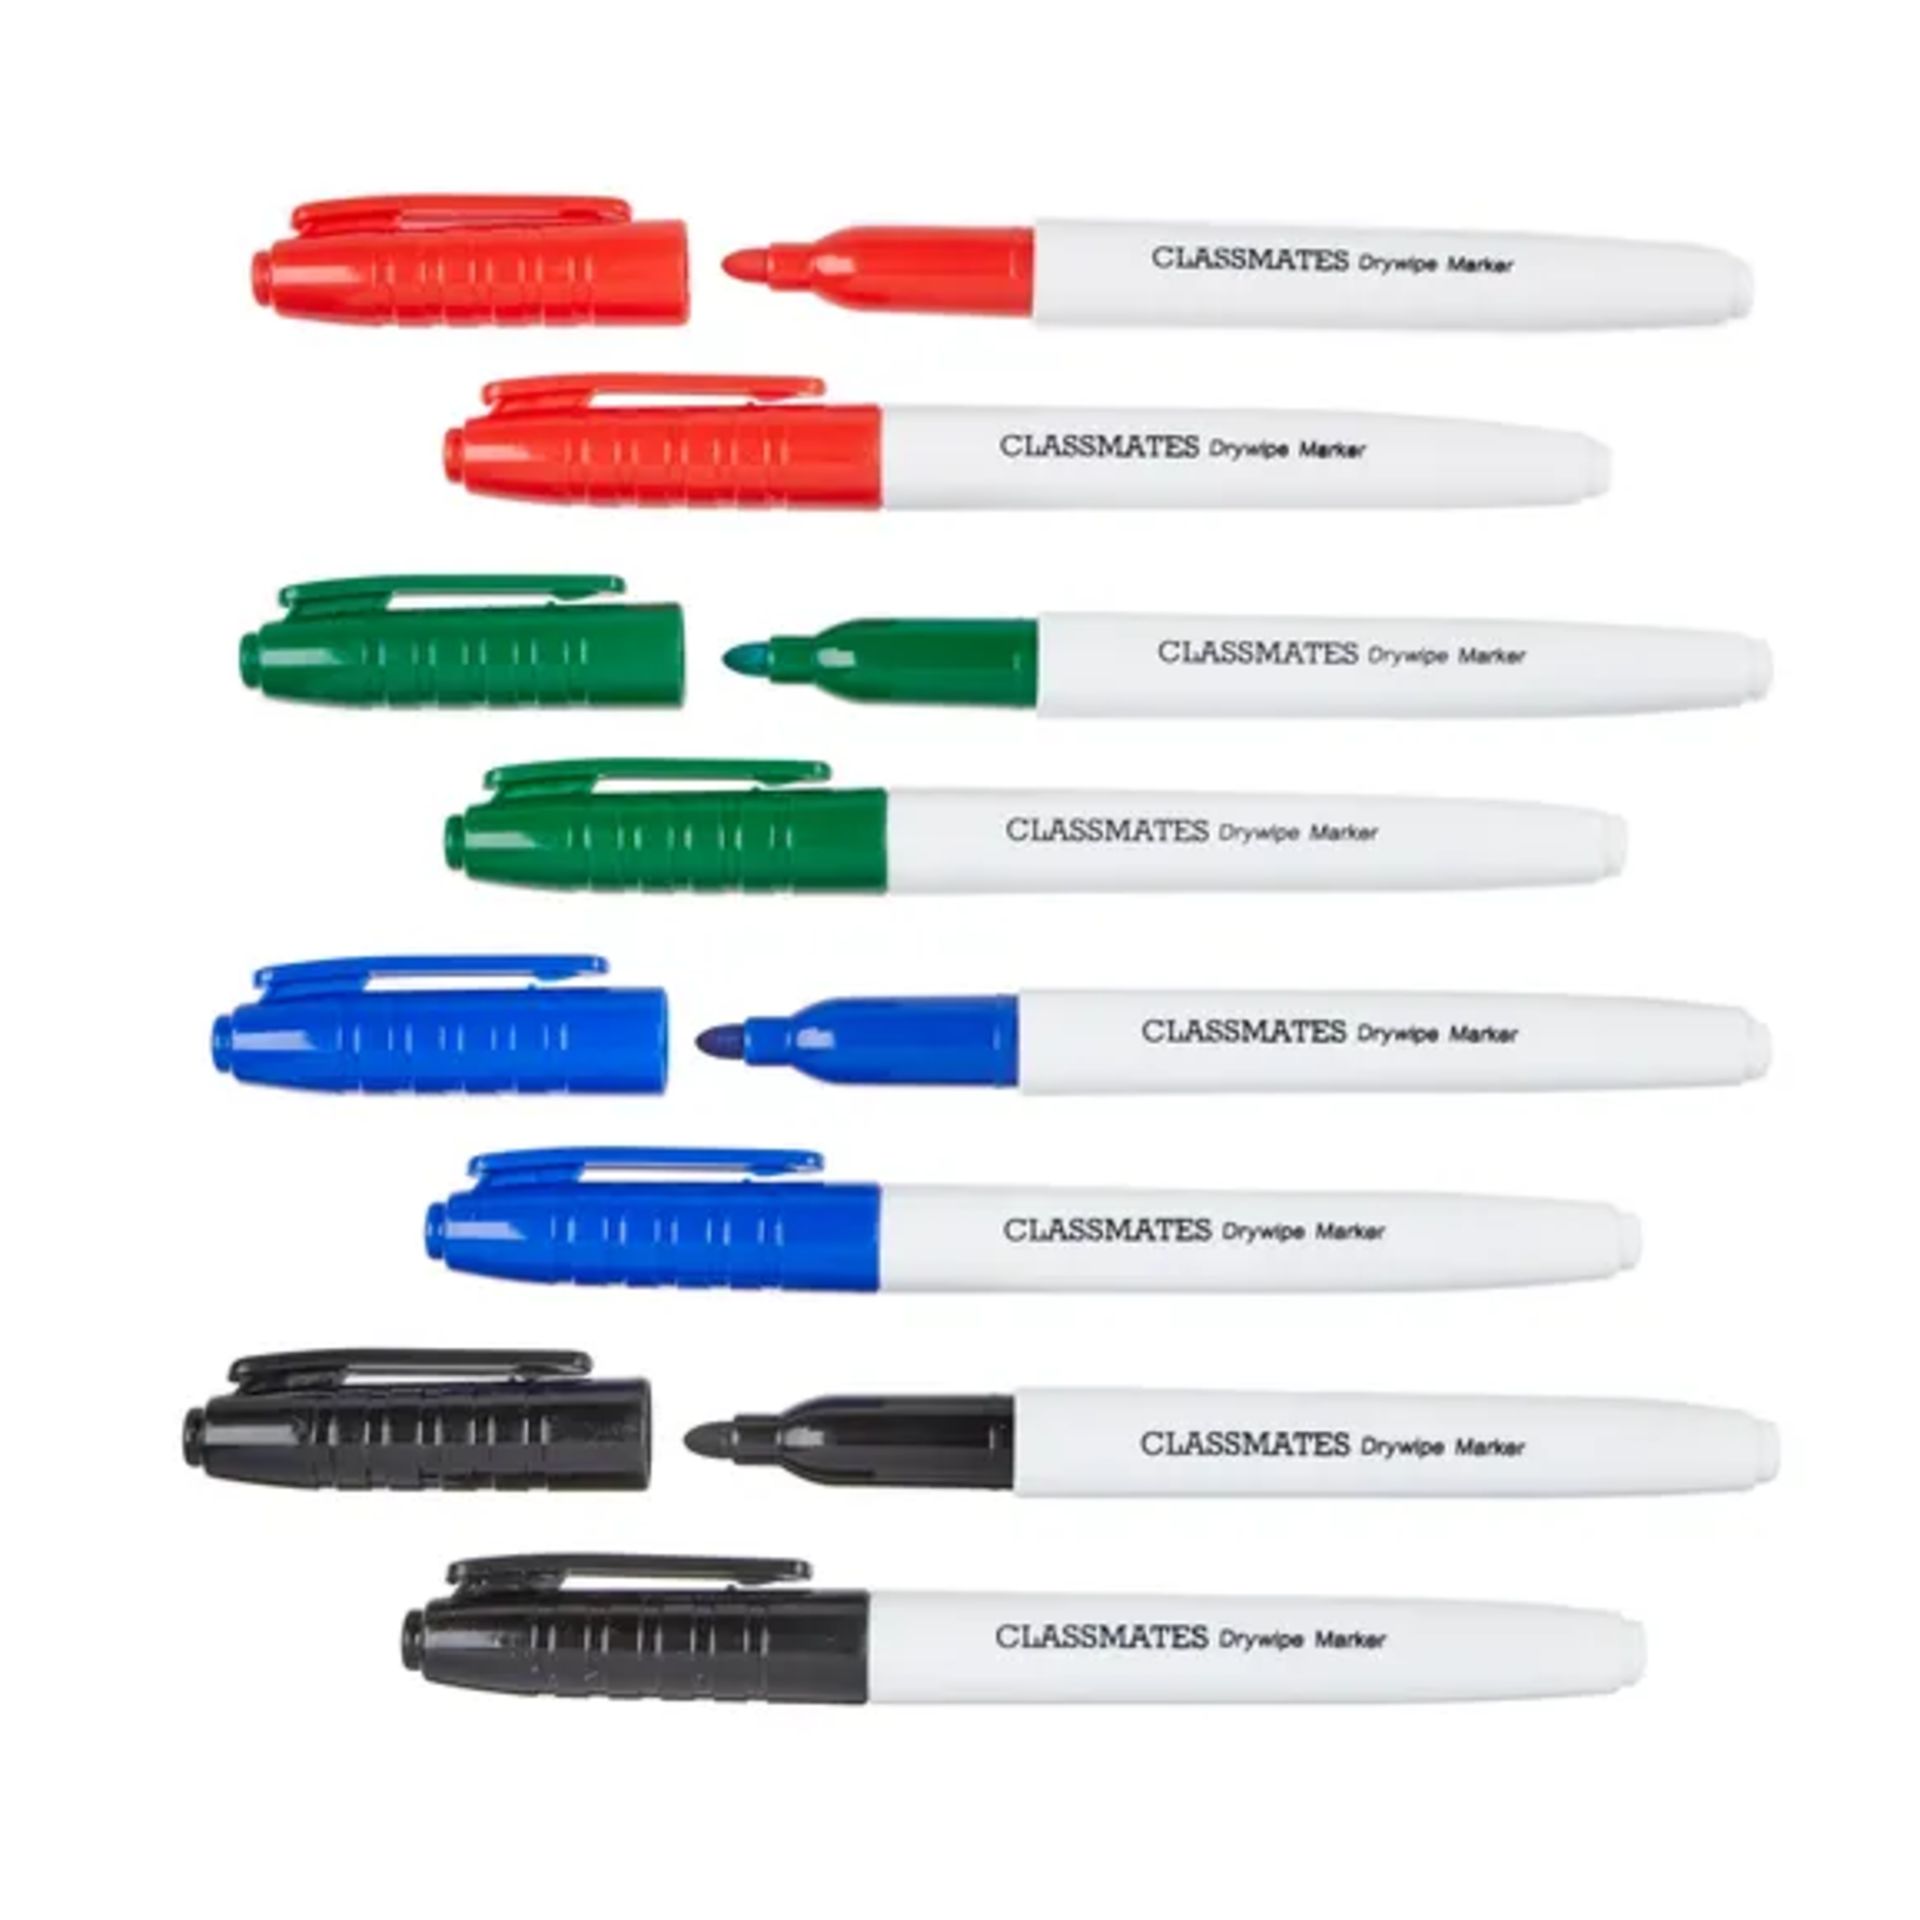 Pallet of Classmates Dry Wipe Pens - Image 2 of 2